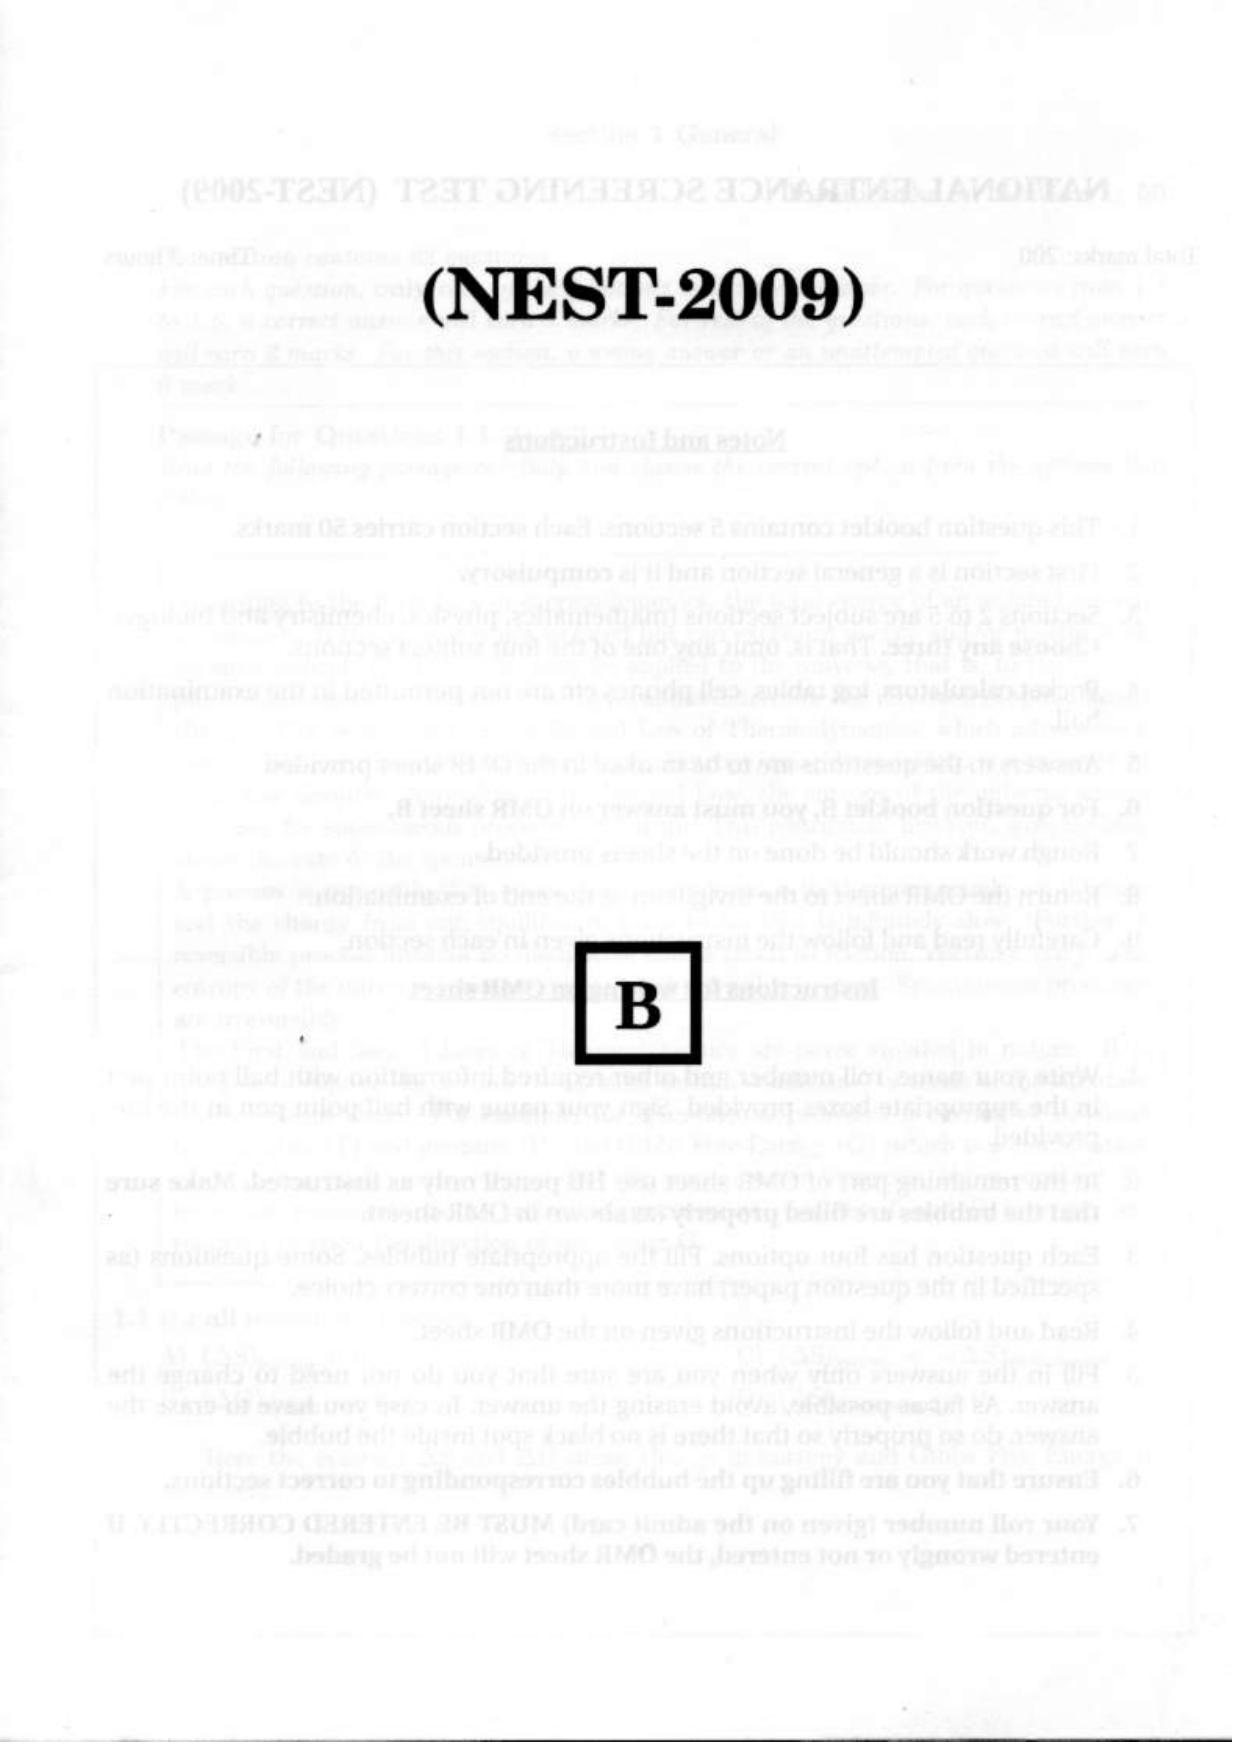 NEST 2009 Question Paper - Page 25